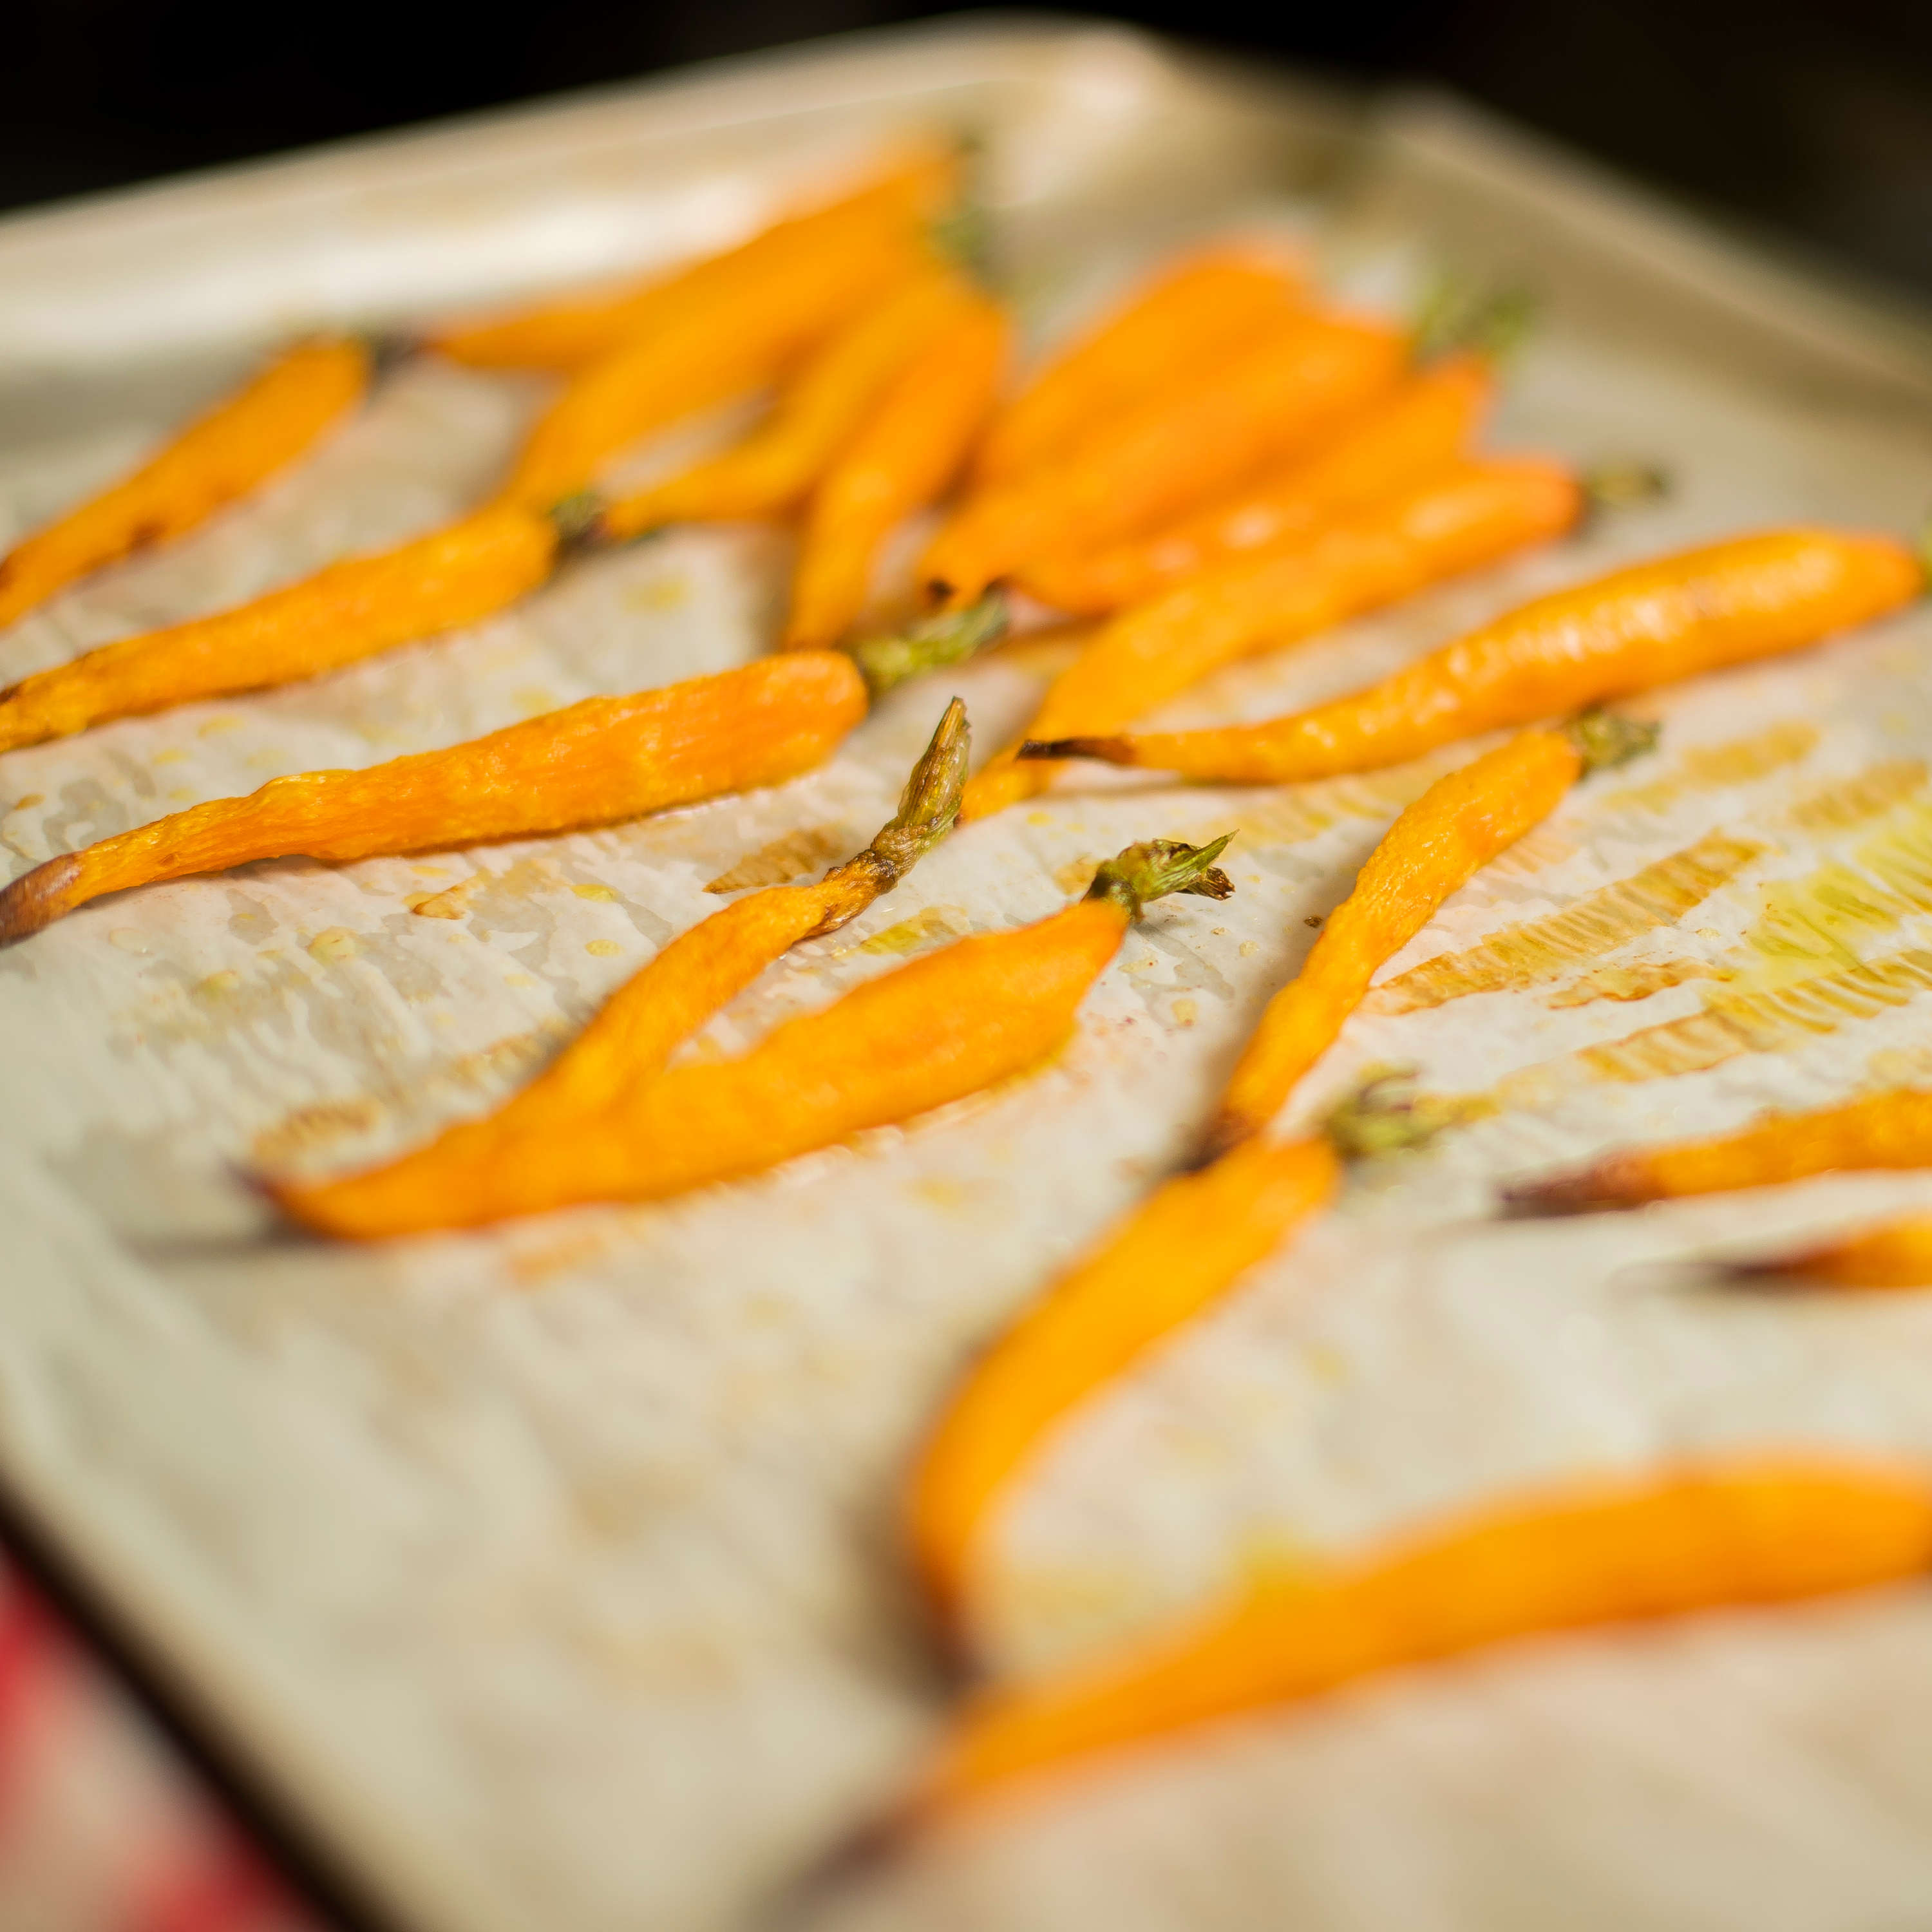 Roasted baby carrots. Photo: Richard Jupe.